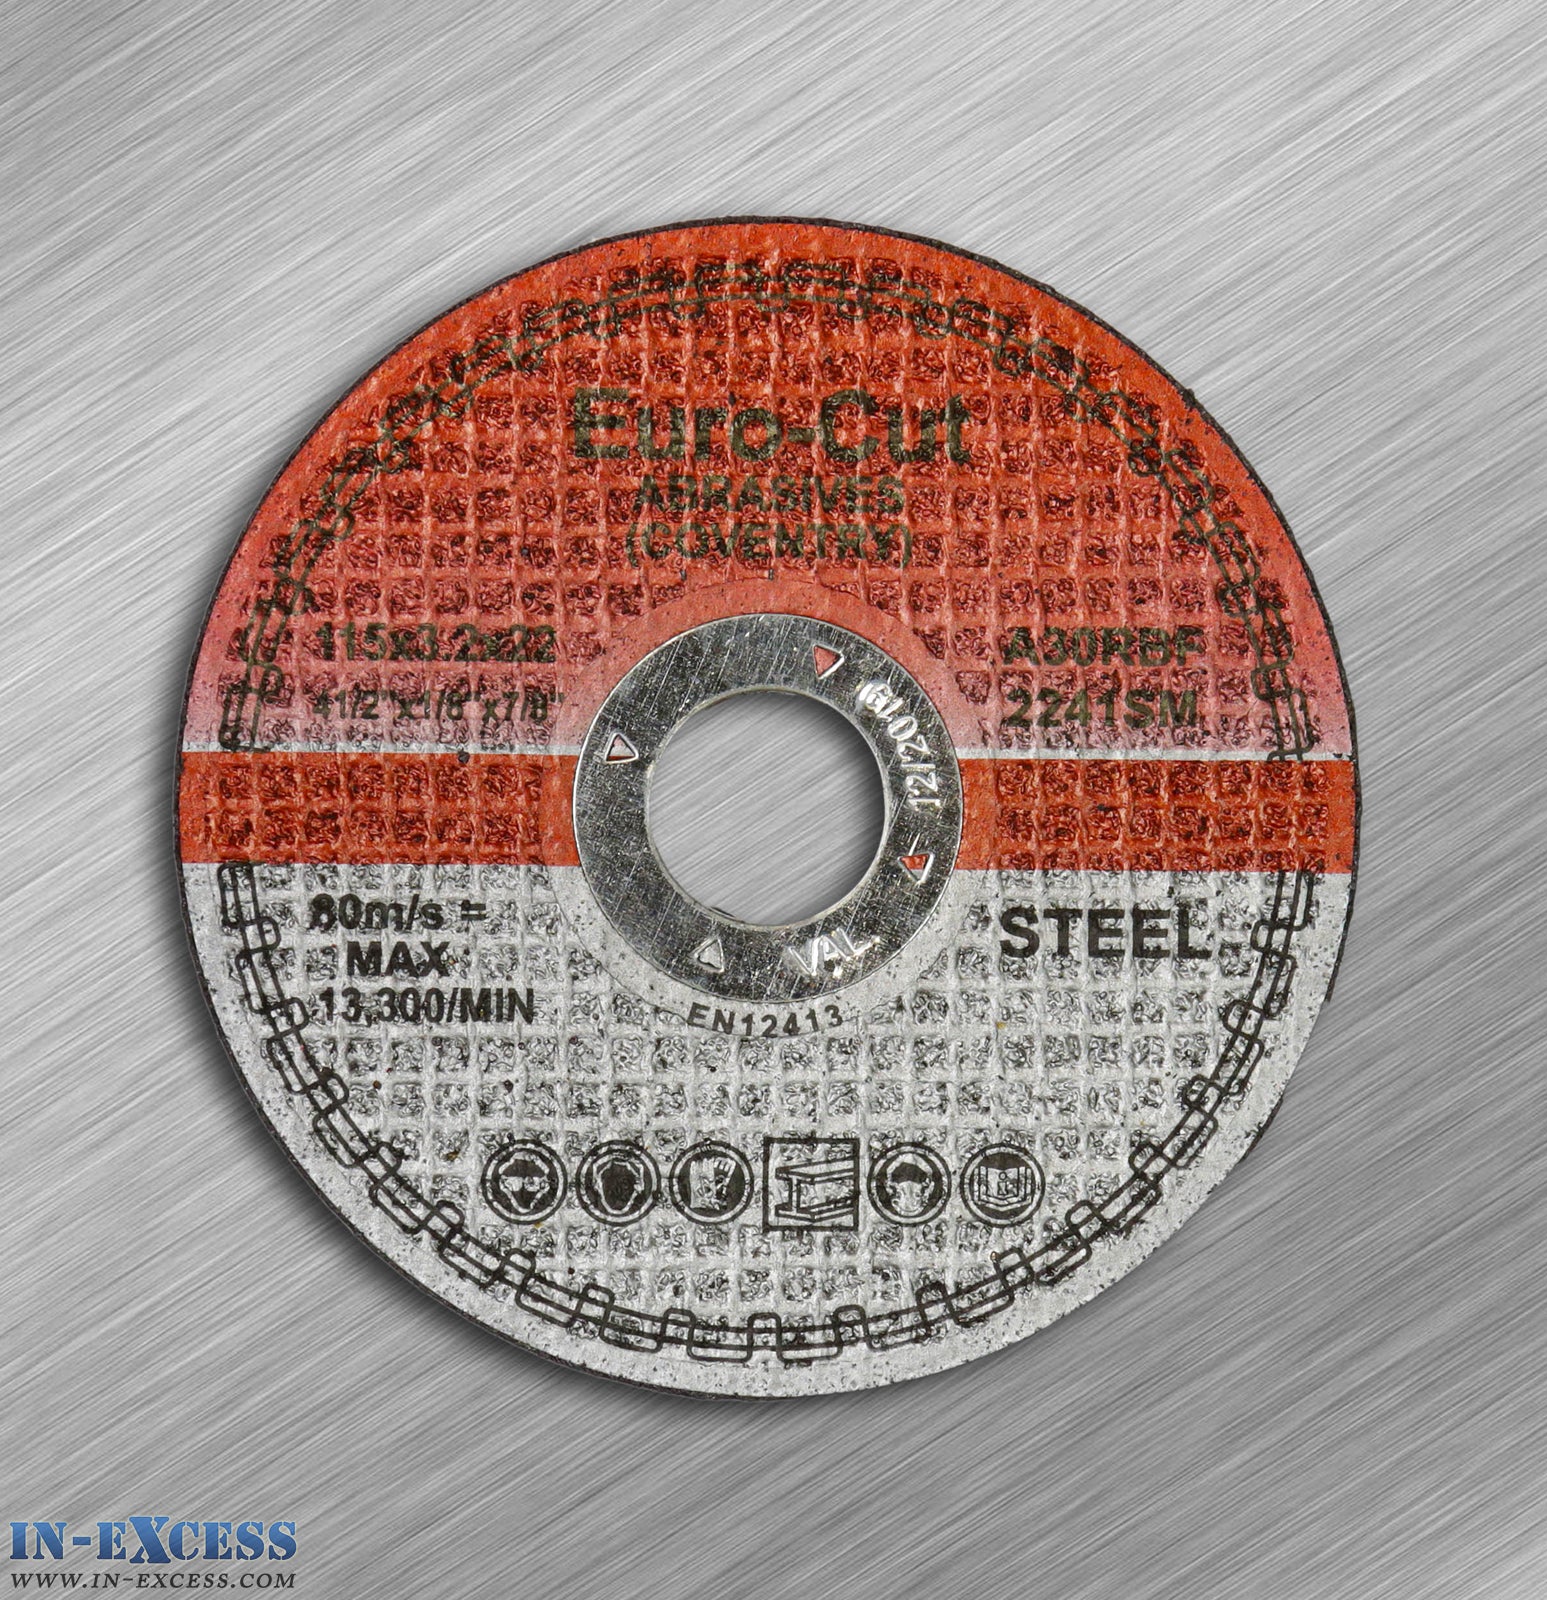 Euro-Cut Steel Cutting Disc 115mm